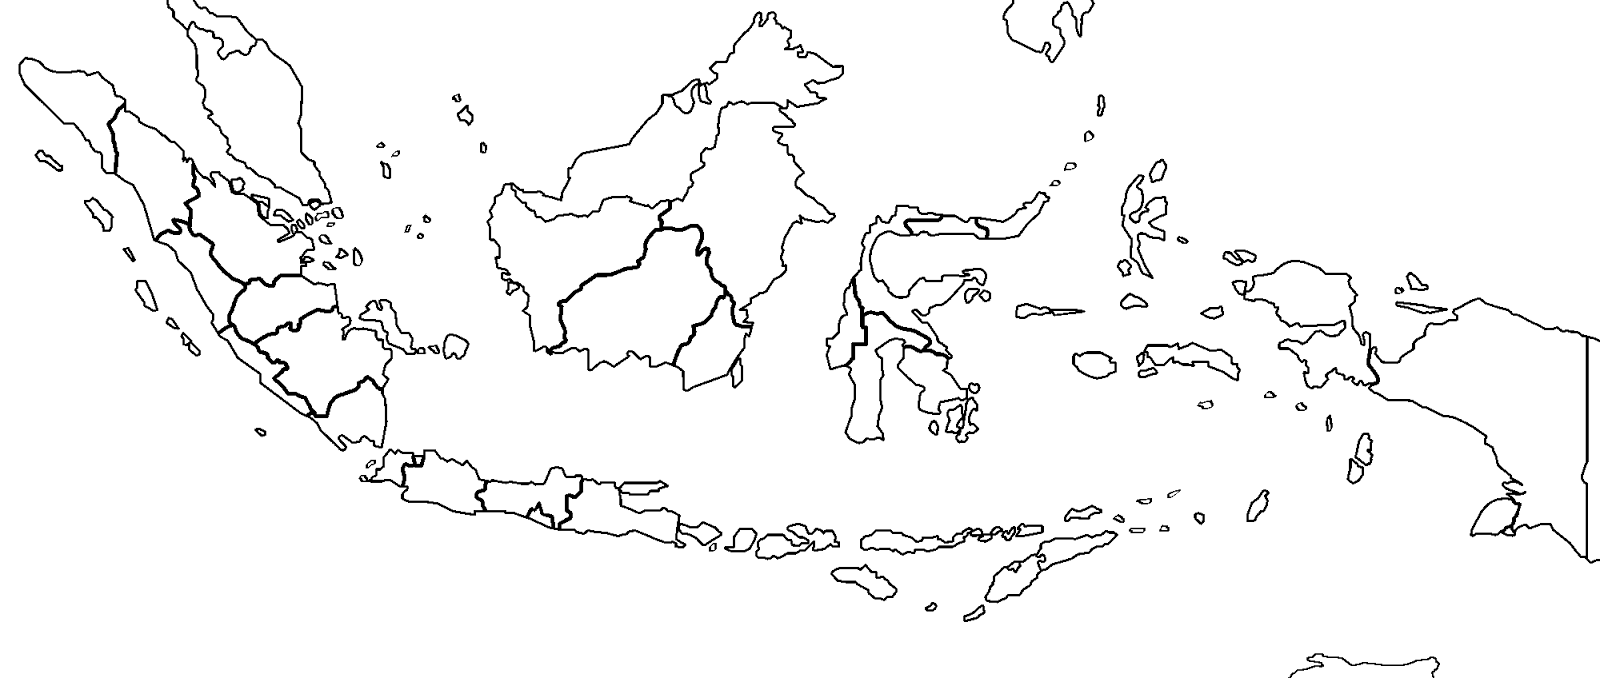 Peta buta indonesia – World Map, Weltkarte, Peta Dunia 